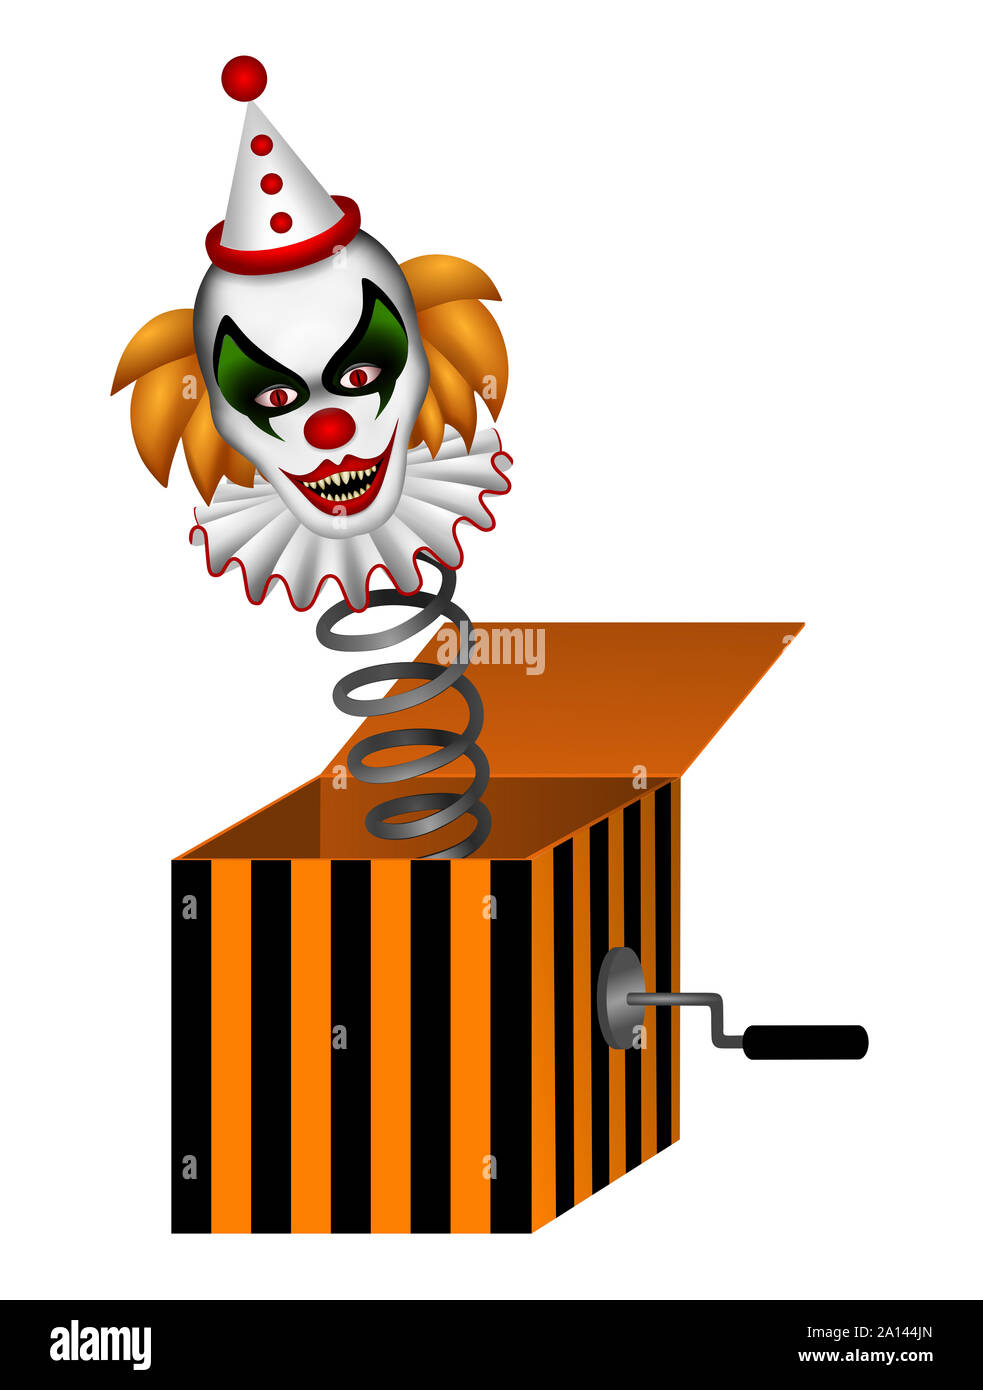 halloween horror clown in the box illustration Stock Photo